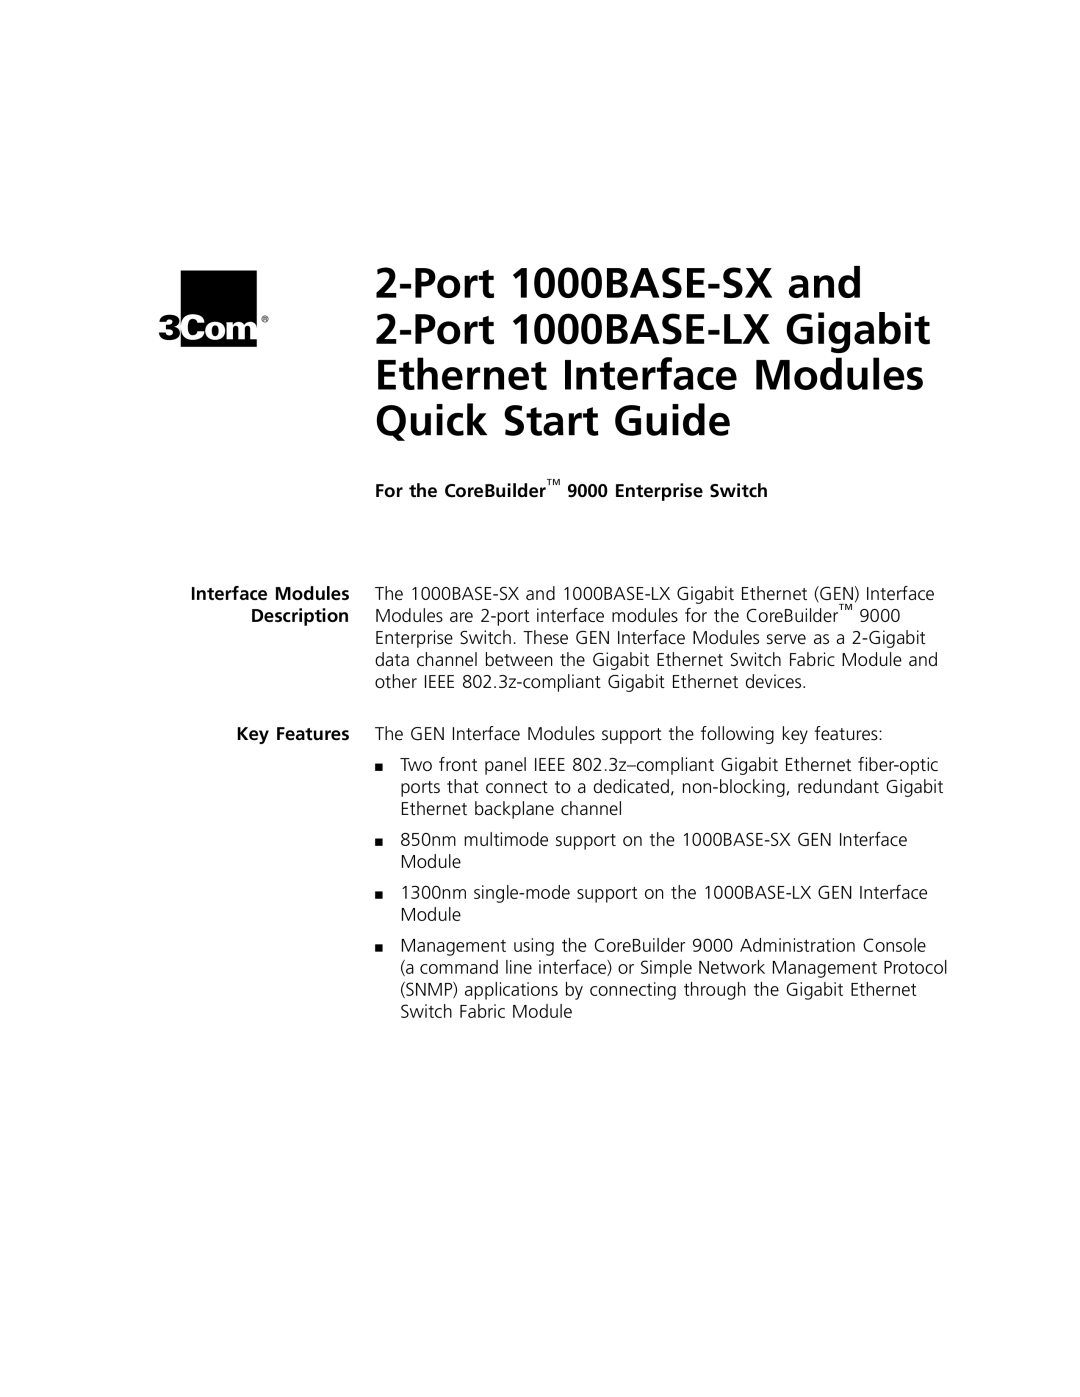 3Com quick start For the CoreBuilder 9000 Enterprise Switch, Port 1000BASE-SXand 2-Port 1000BASE-LXGigabit 